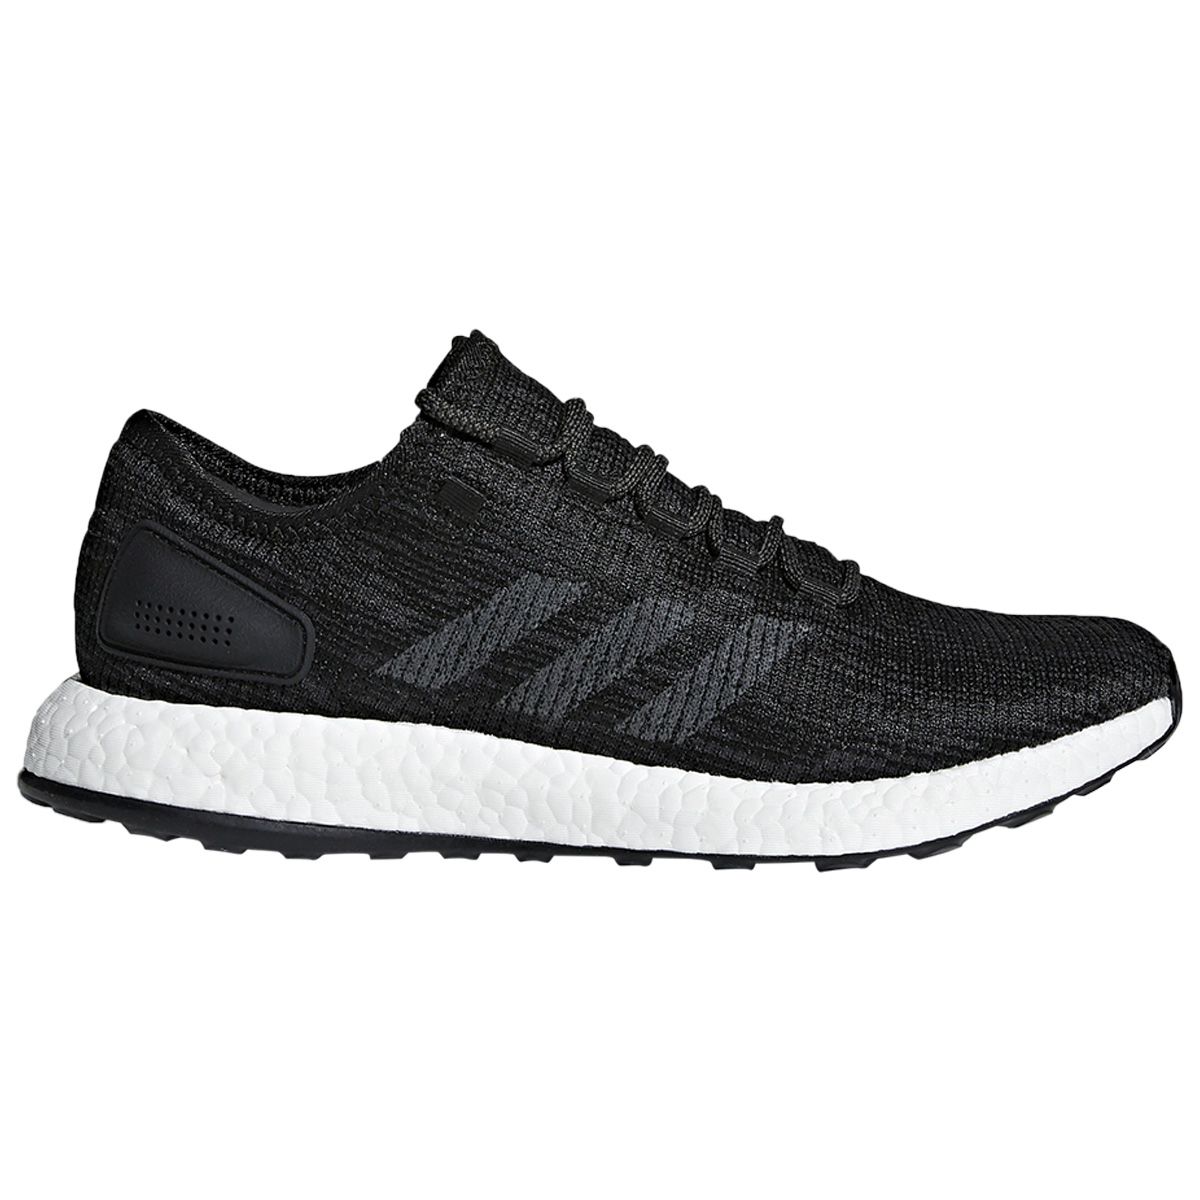 Adidas PureBoost Running Shoes Black 